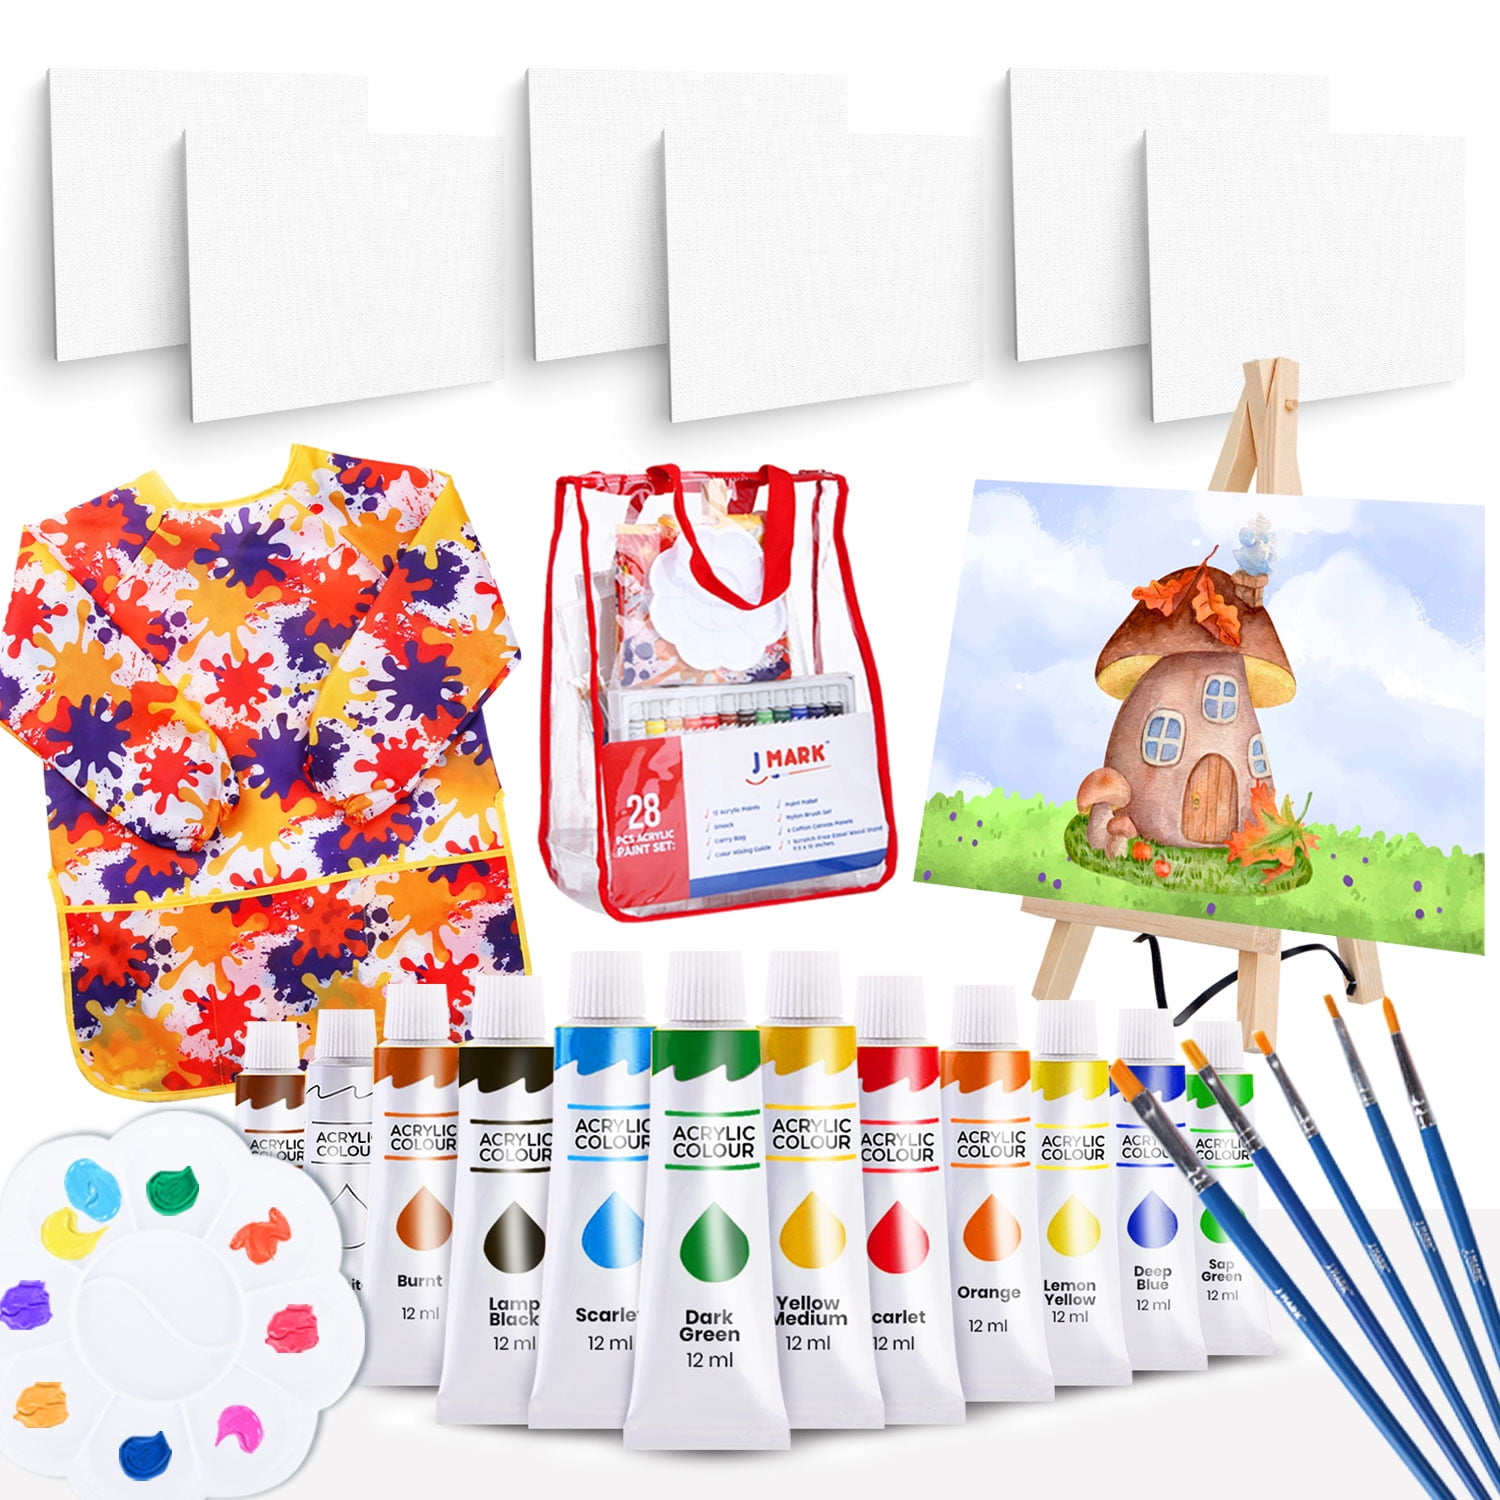 J MARK Acrylic & Watercolor Painting Kit – Complete Painting Set with  Watercolor Kit, Acrylic & Watercolor Paint Tubes, Wood Easel, Watercolor  Paper